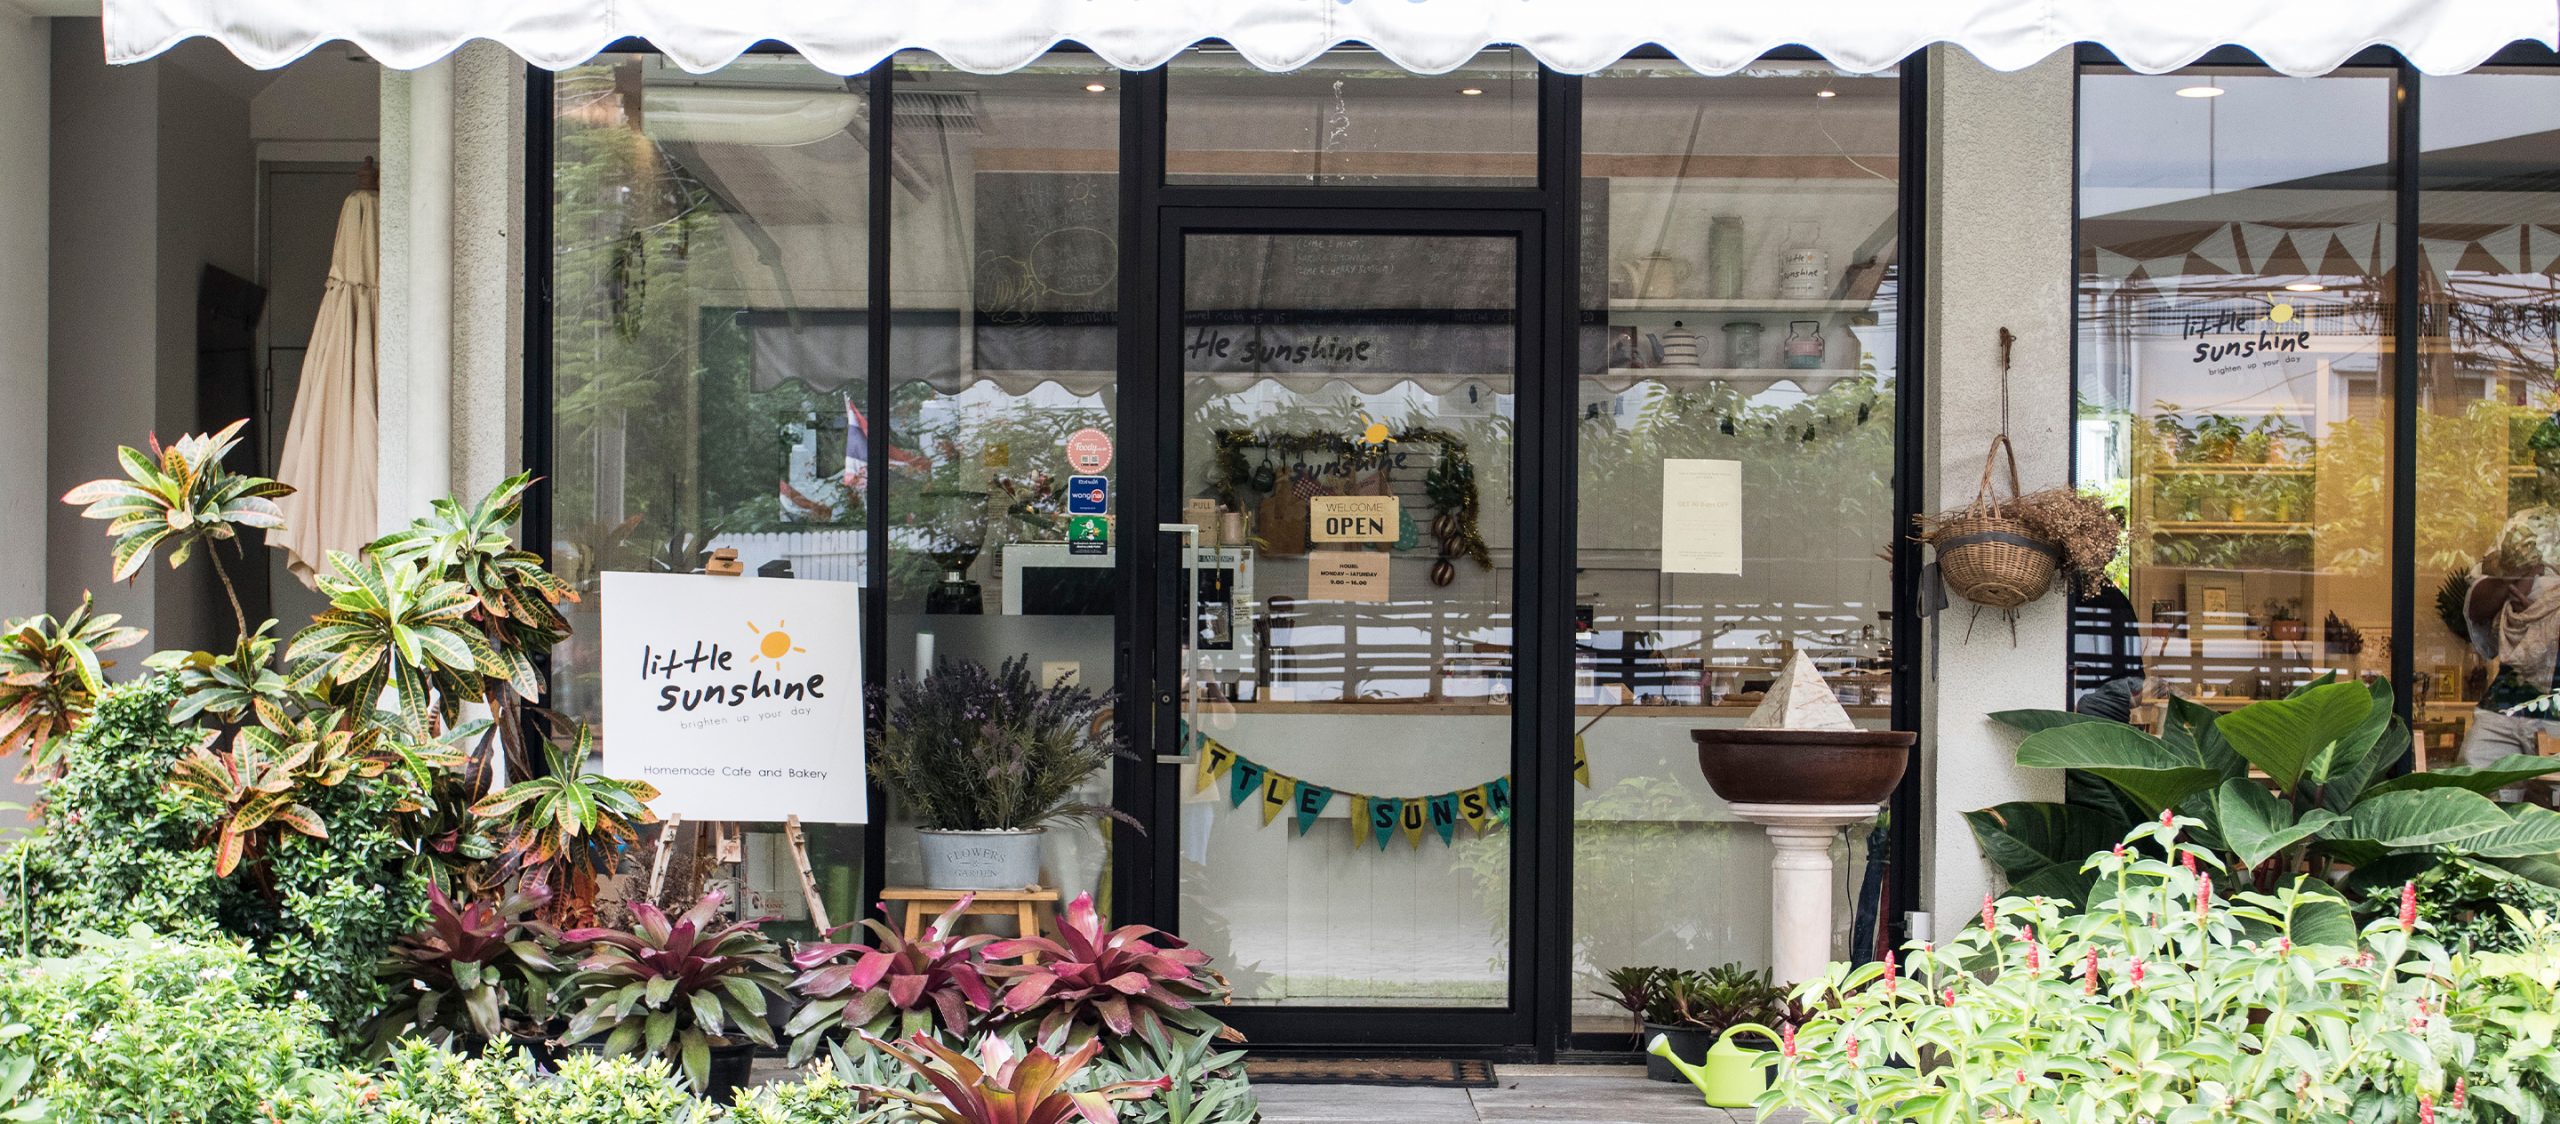 Little Sunshine Cafe ร้านโฮมเมดของนักกำหนดอาหารที่ปรุงจานอร่อยสุขภาพดีด้วยวัตถุดิบอินทรีย์คัดสรร